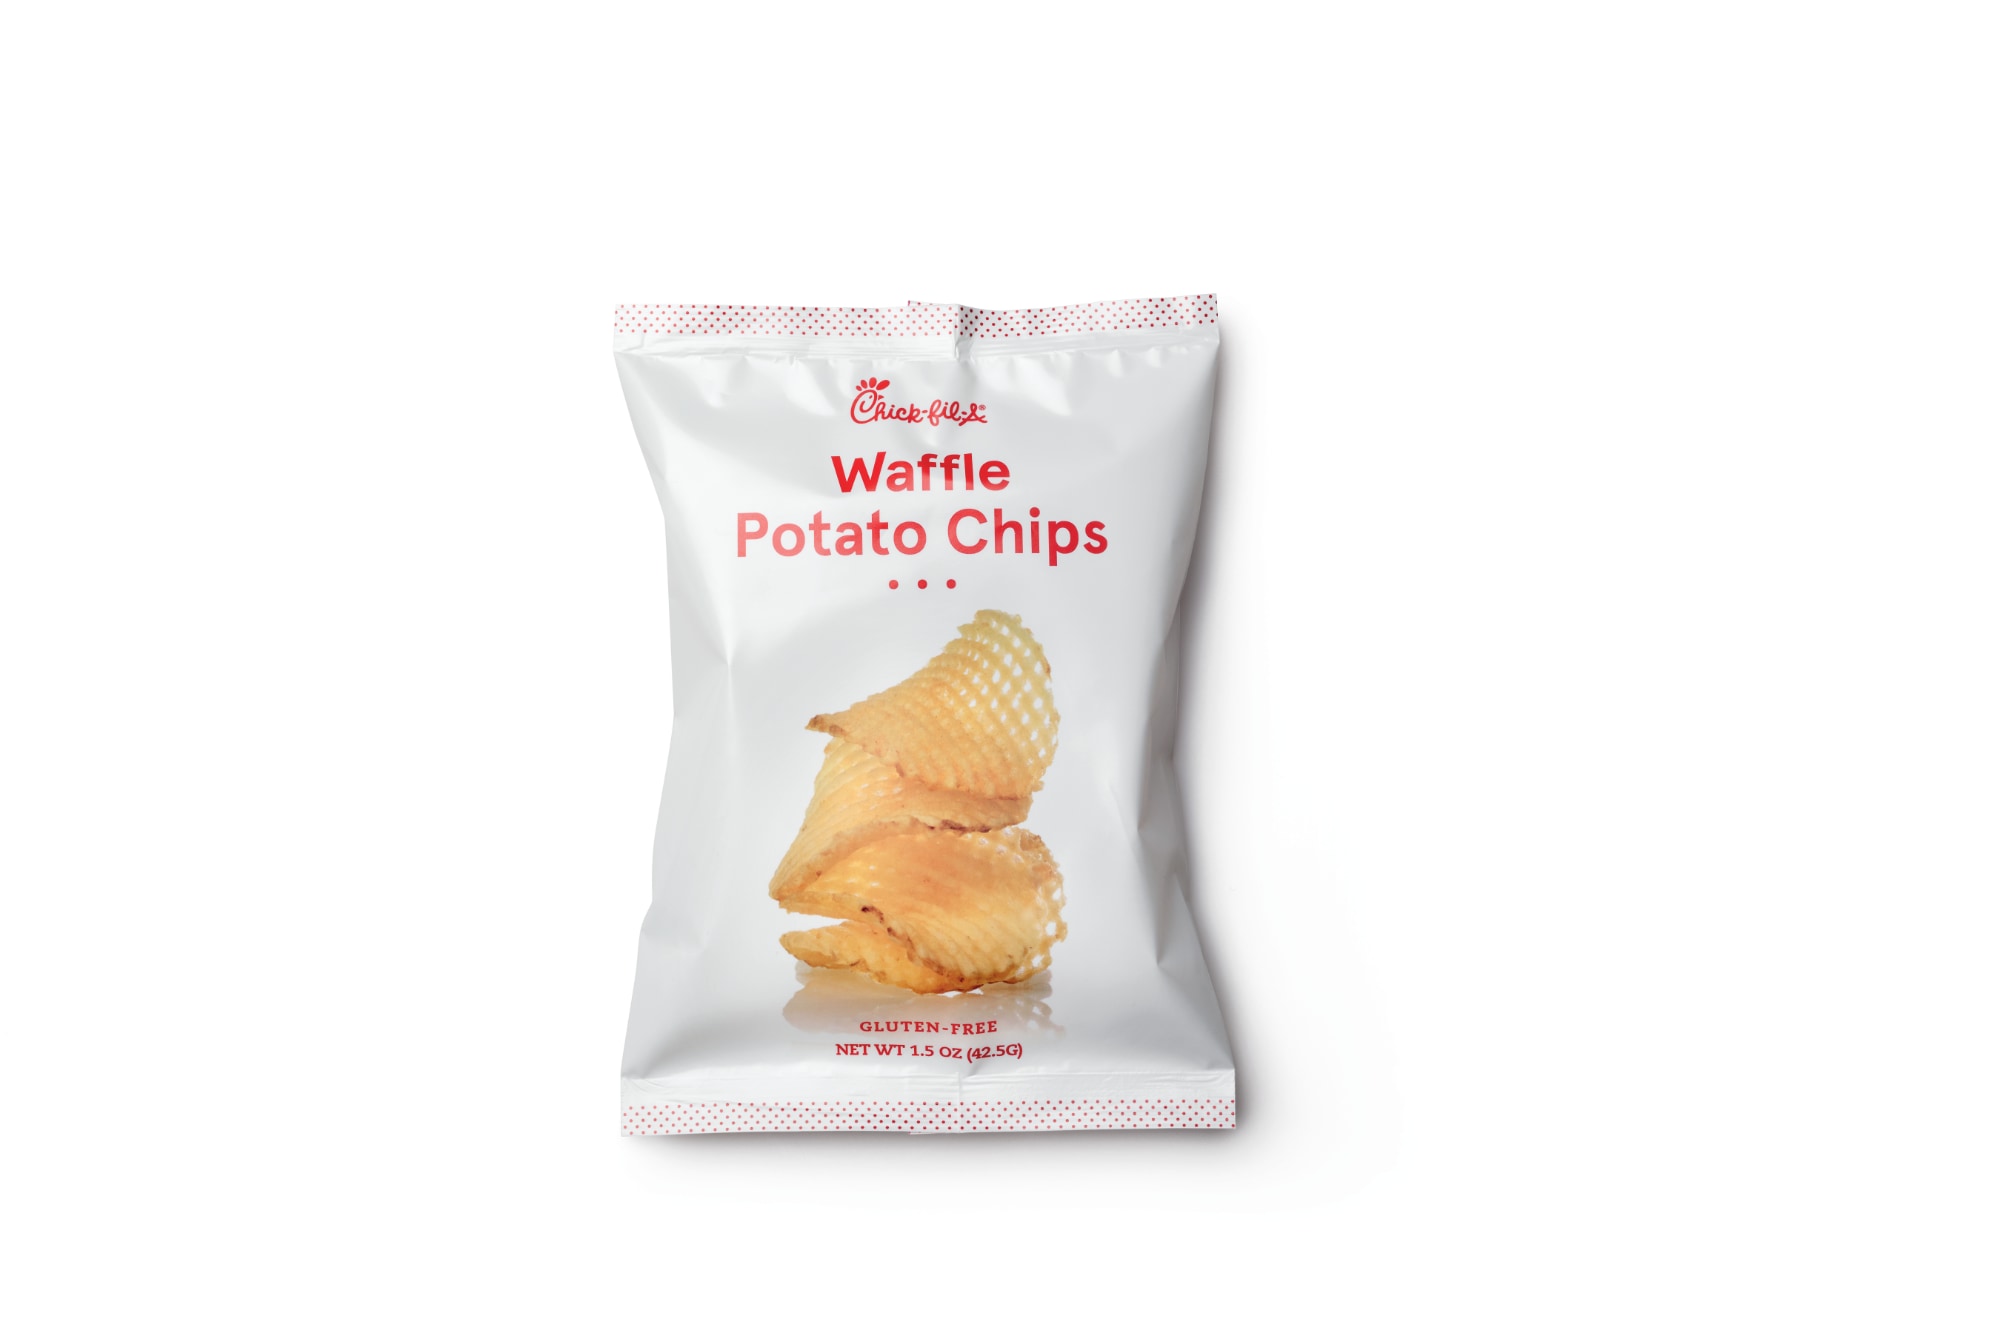 A bag of Chick-fil-A Waffle potato chips. 